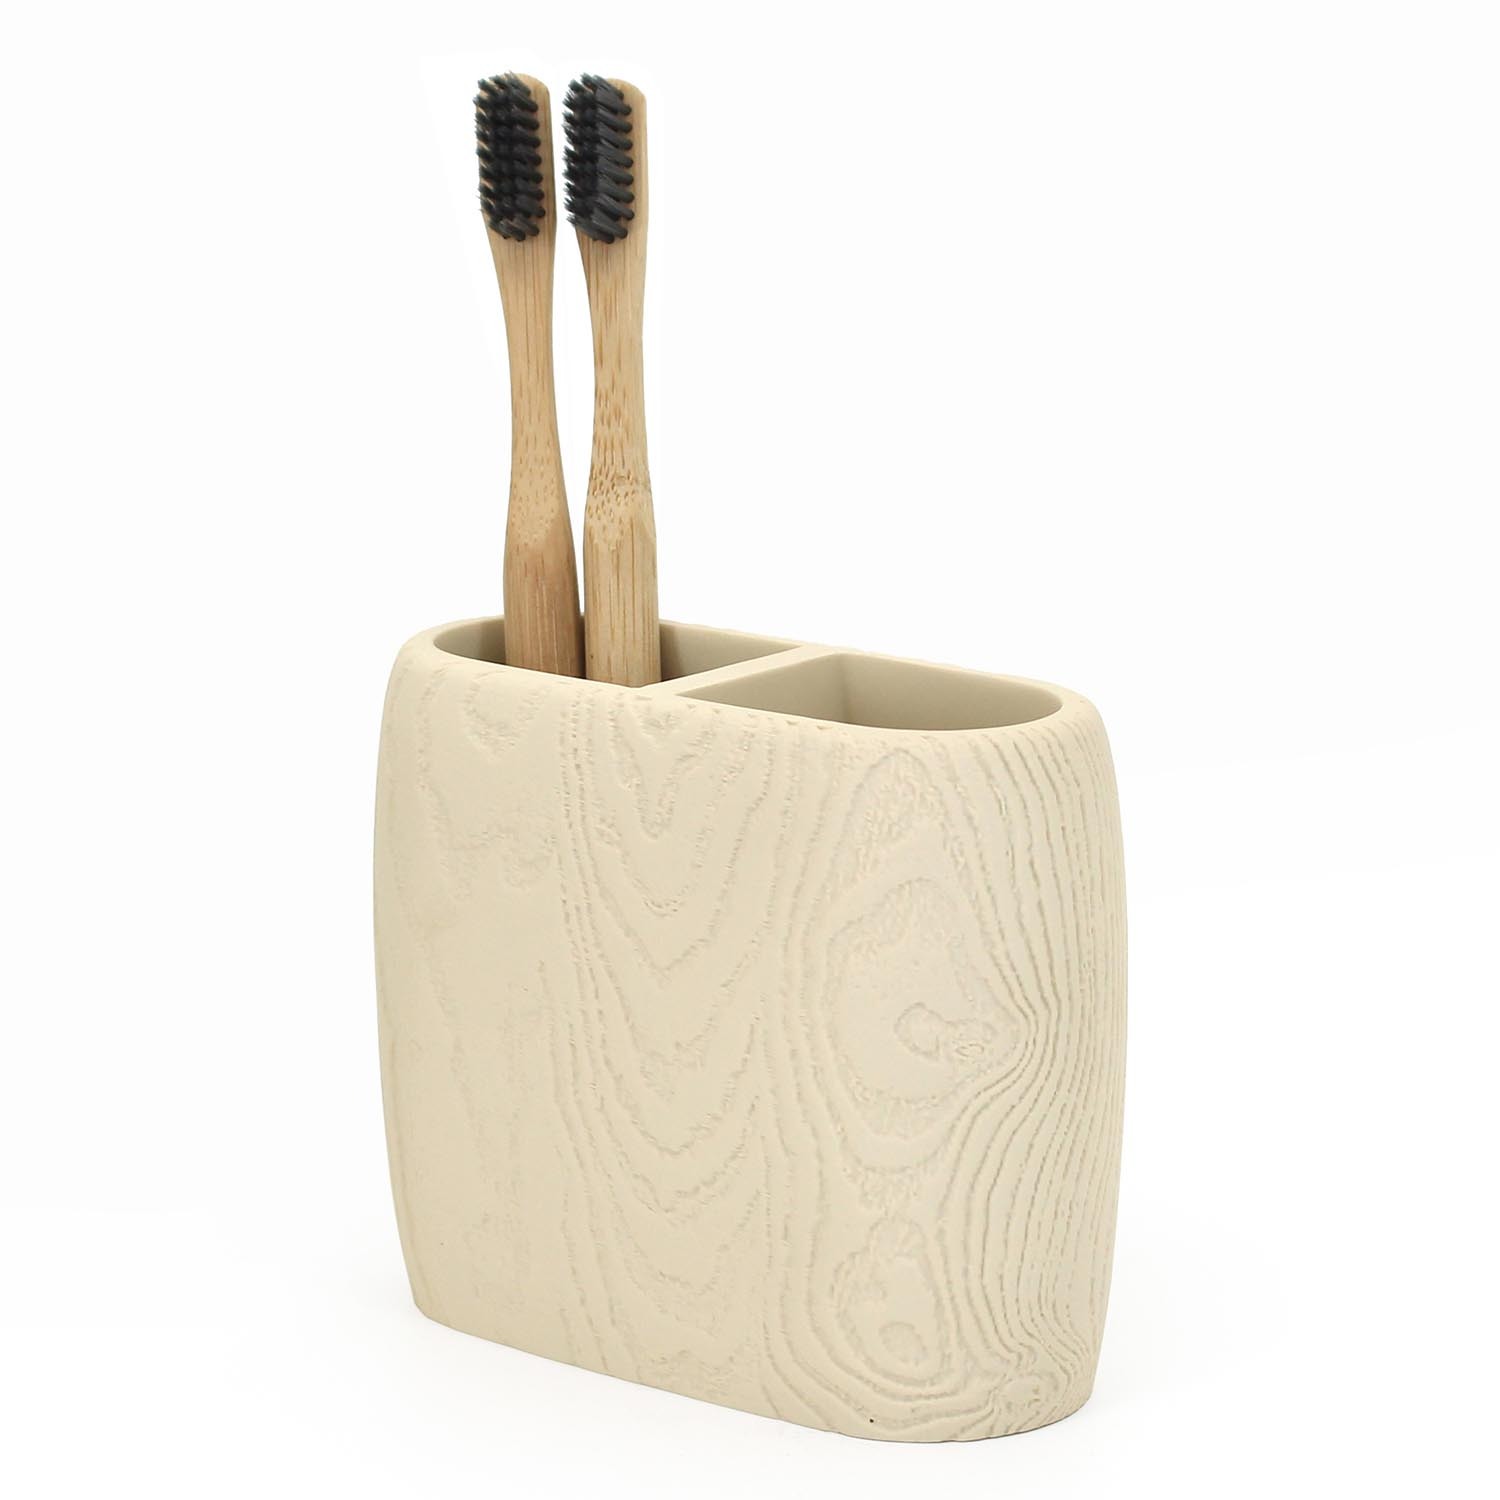 Wood Grain Toothbrush Holder - Natural Image